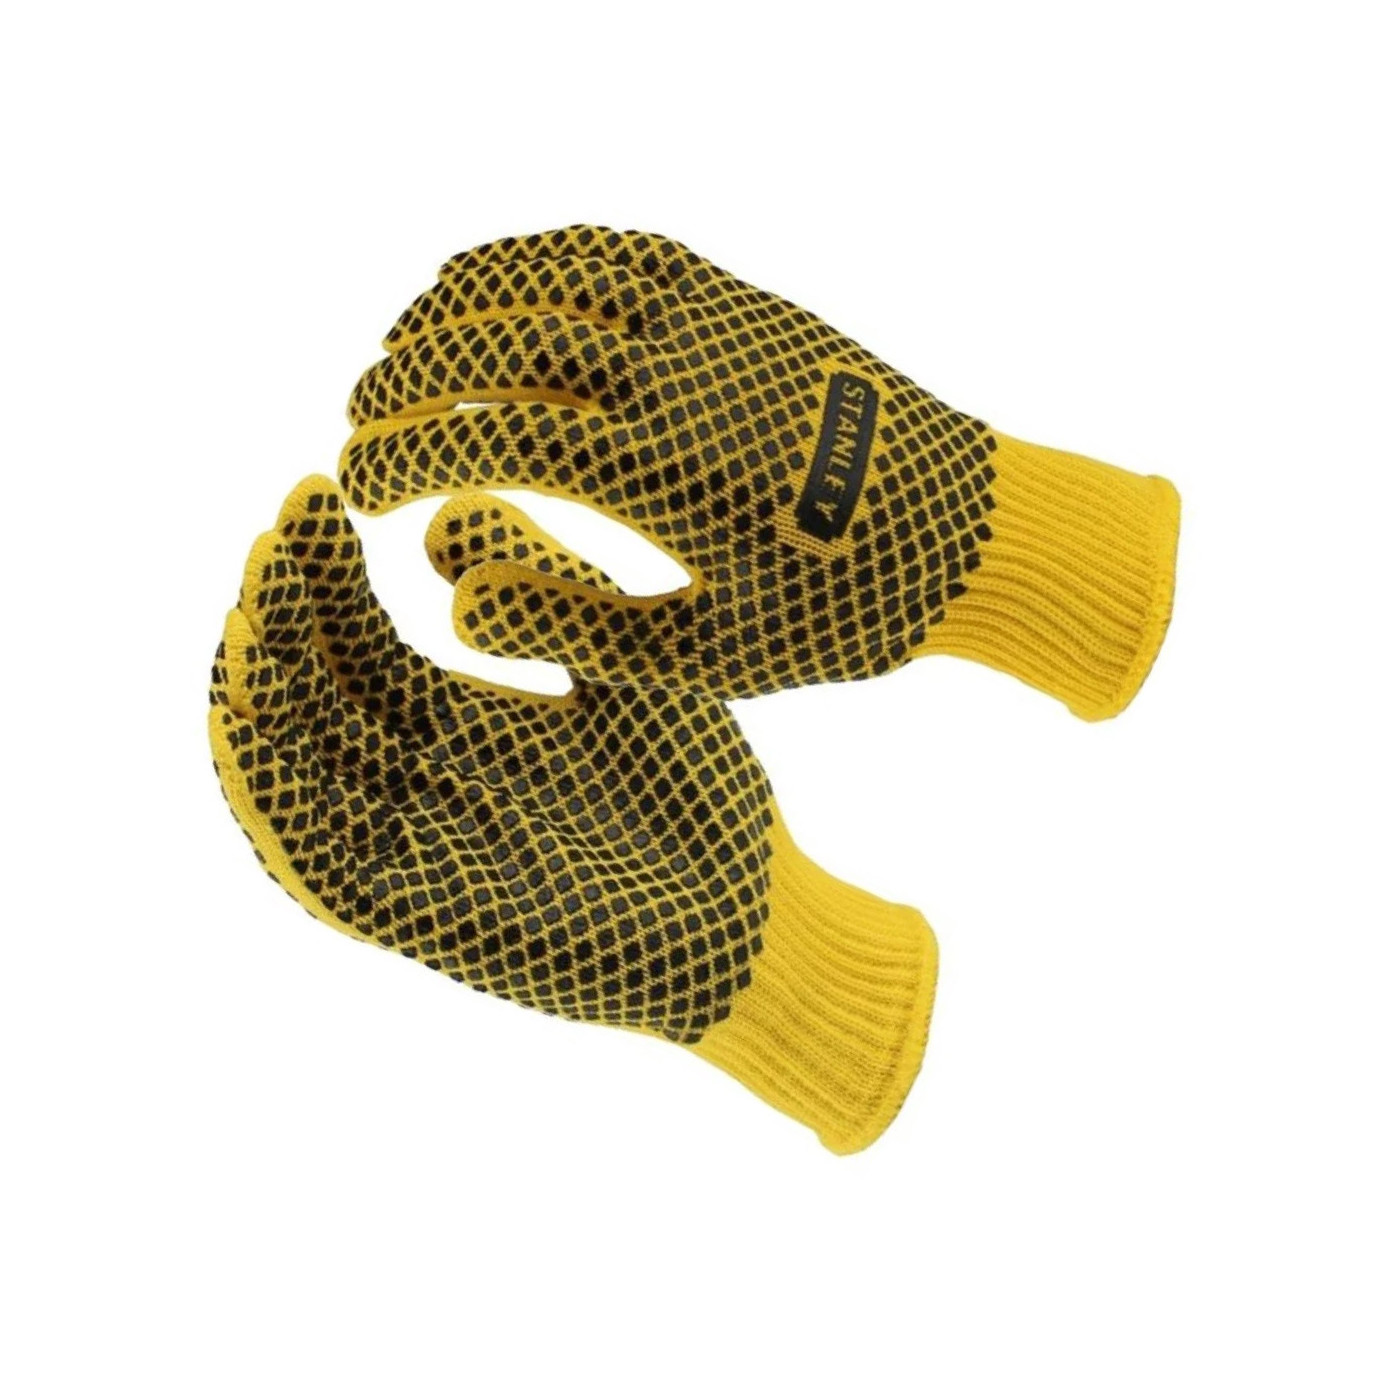 Set of Stanley work gloves (yellow / black)